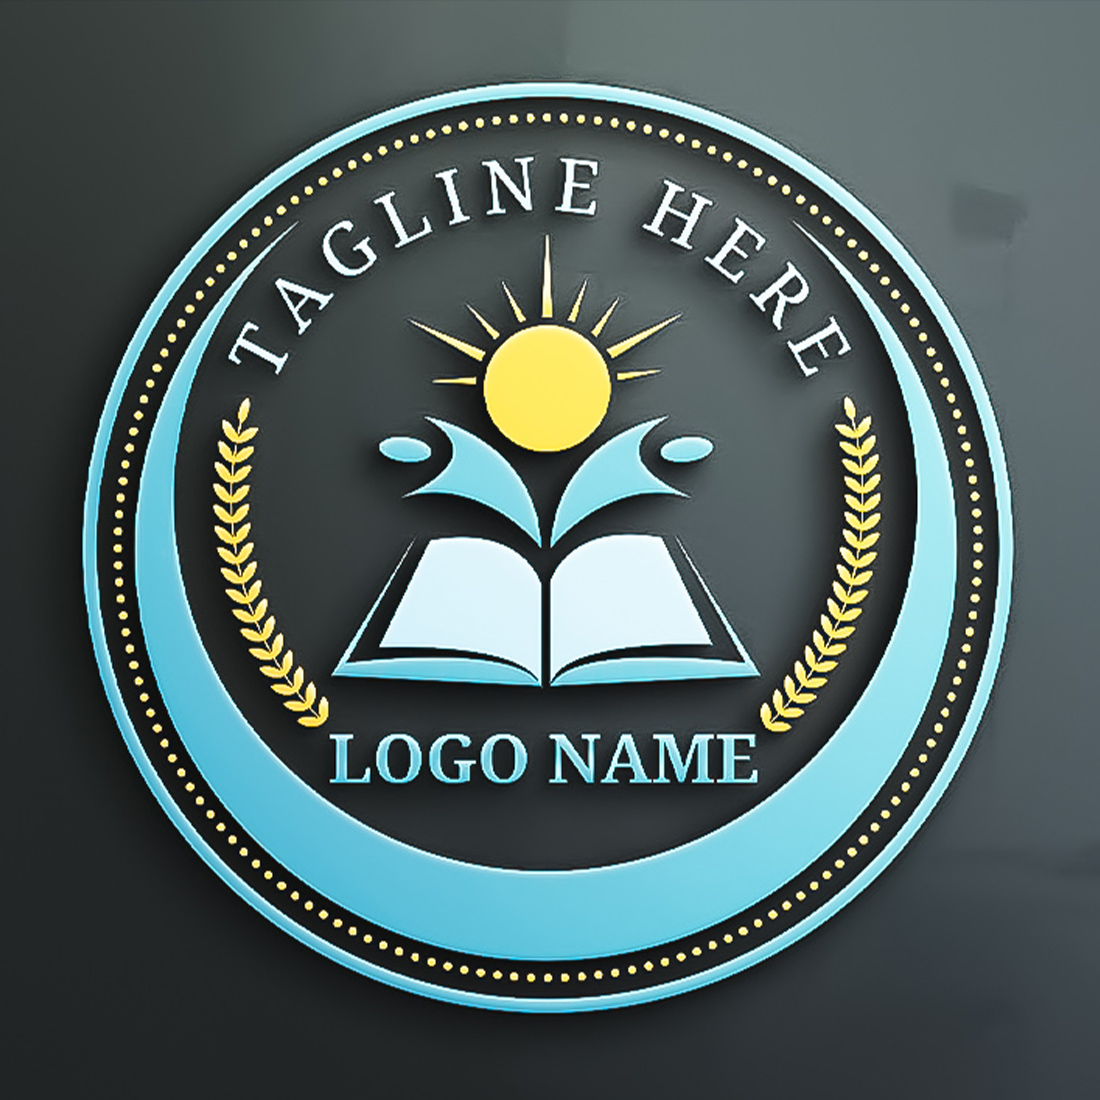 Premium School Badge Logo Design Kit - 100% Editable Vector Templates cover image.